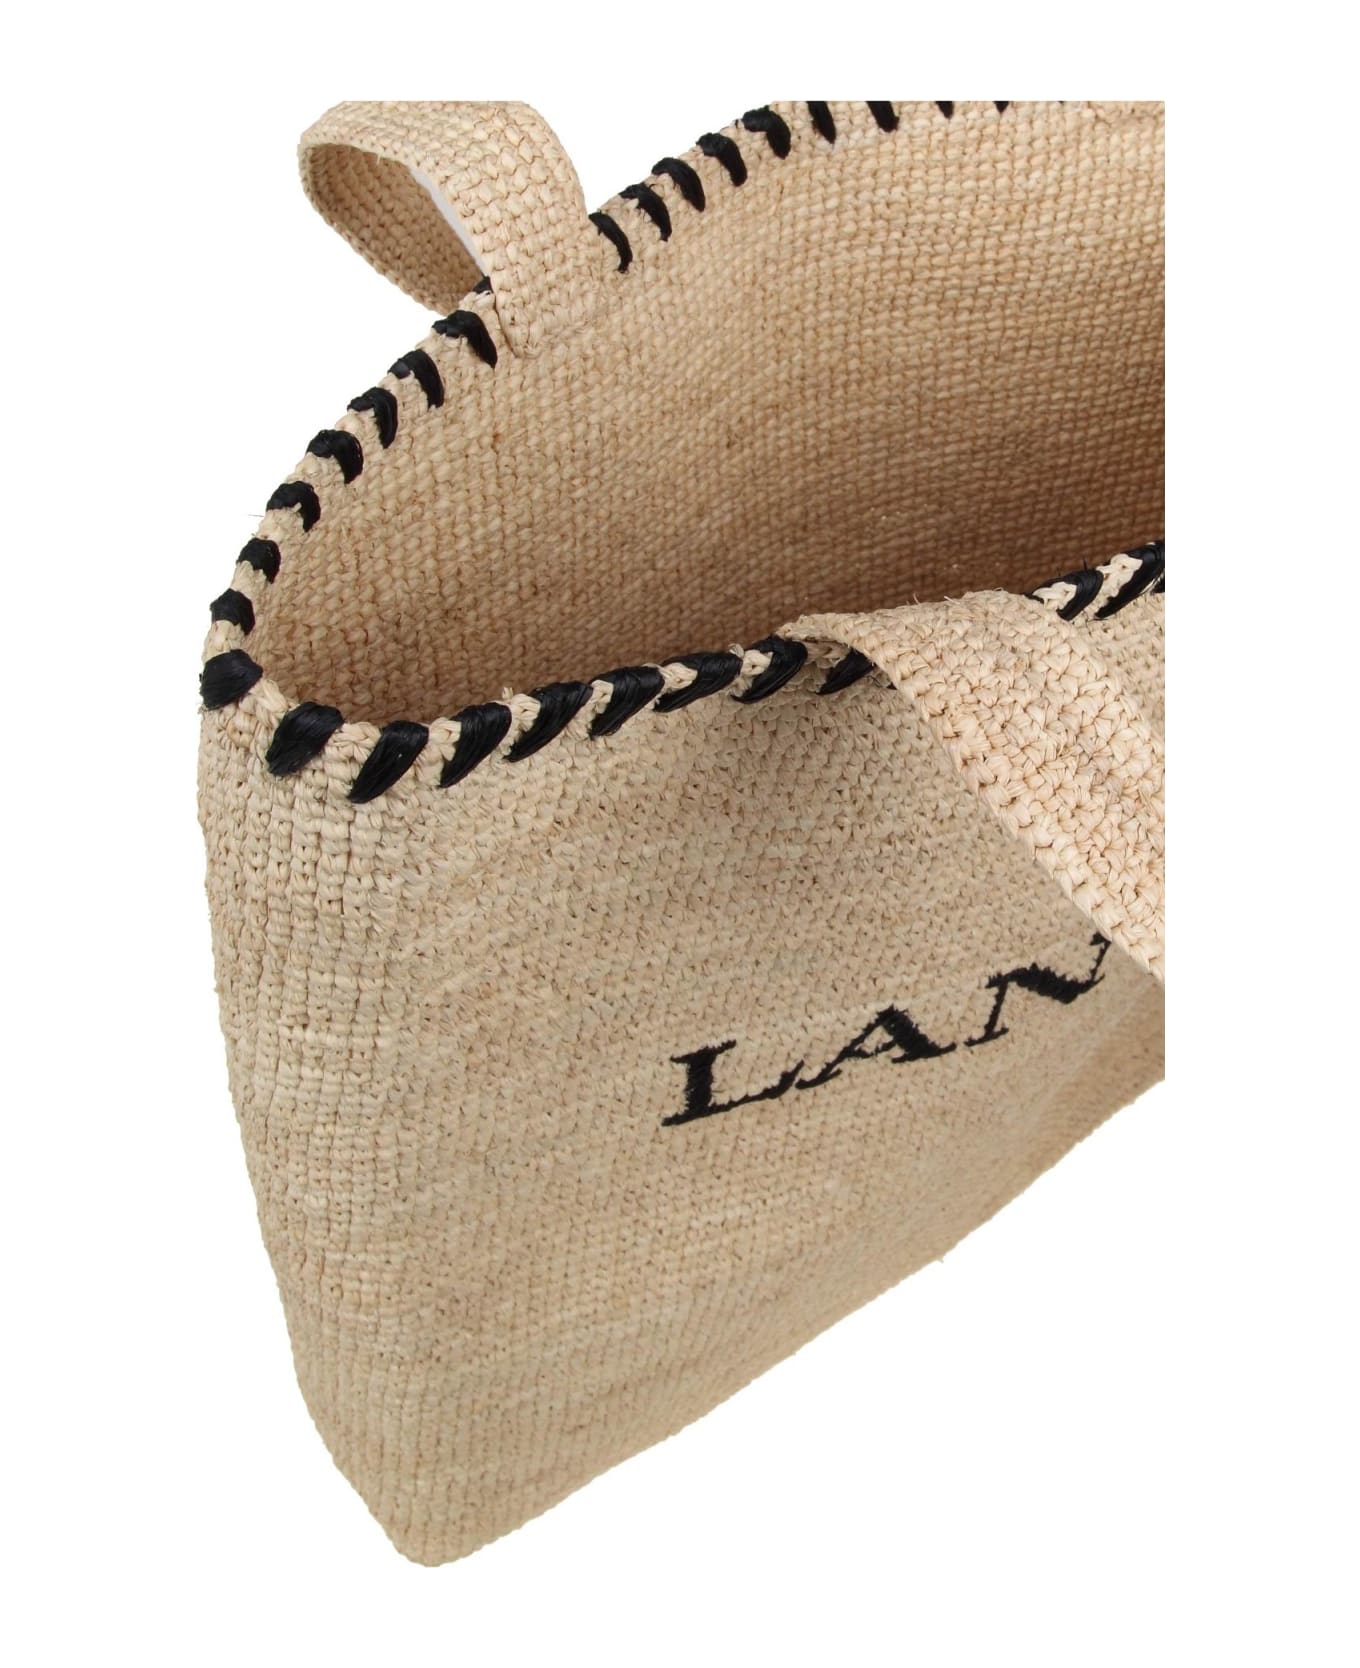 Lanvin Tote Bag In Raffia With Embroidery - Natural / Black